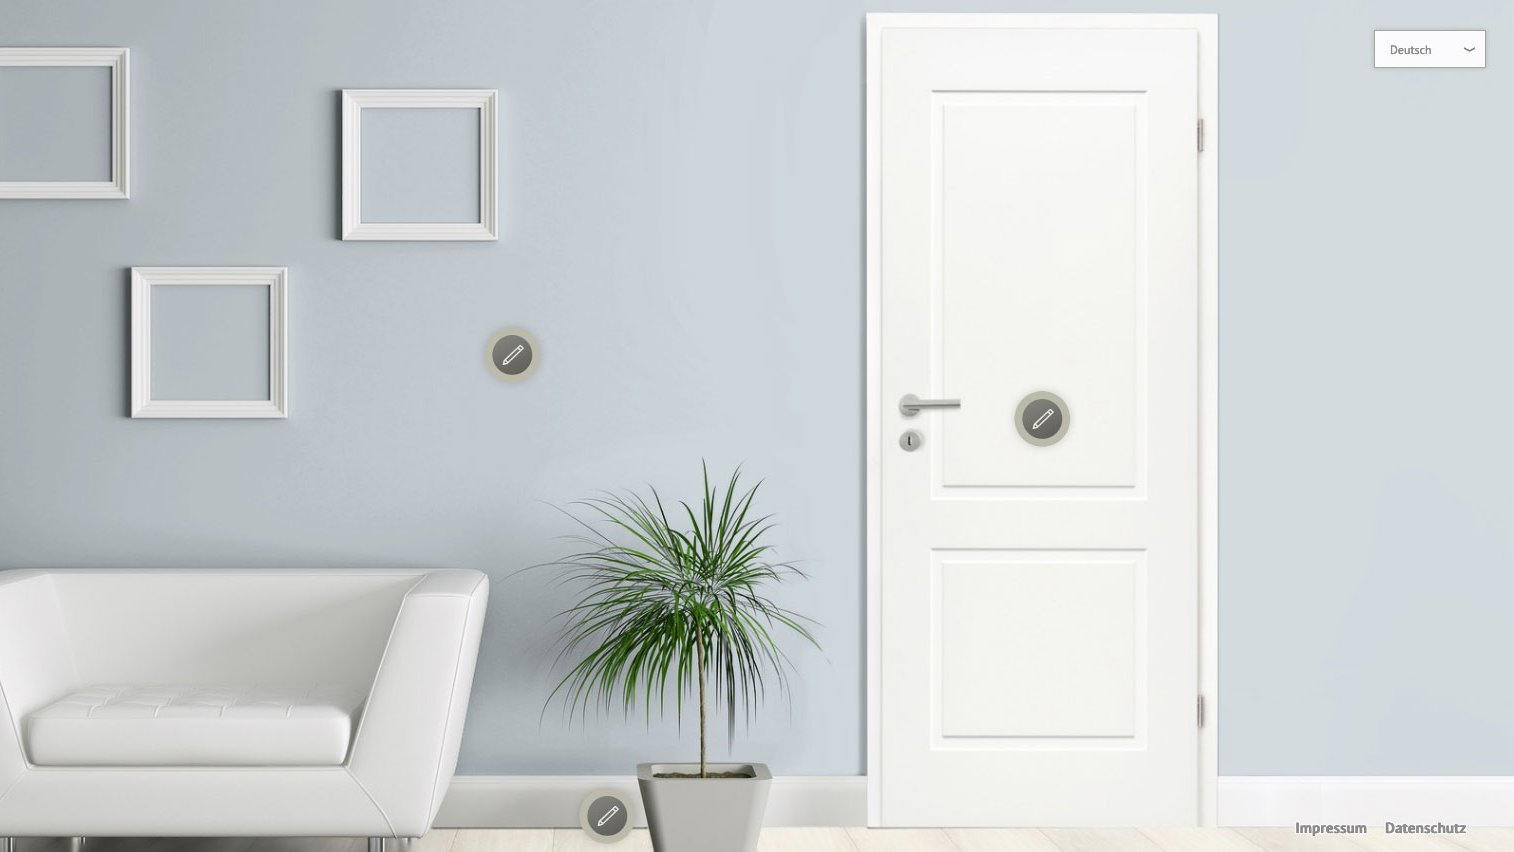 Türen in Engstingen gestalten mit designStudio Türen von herbholz